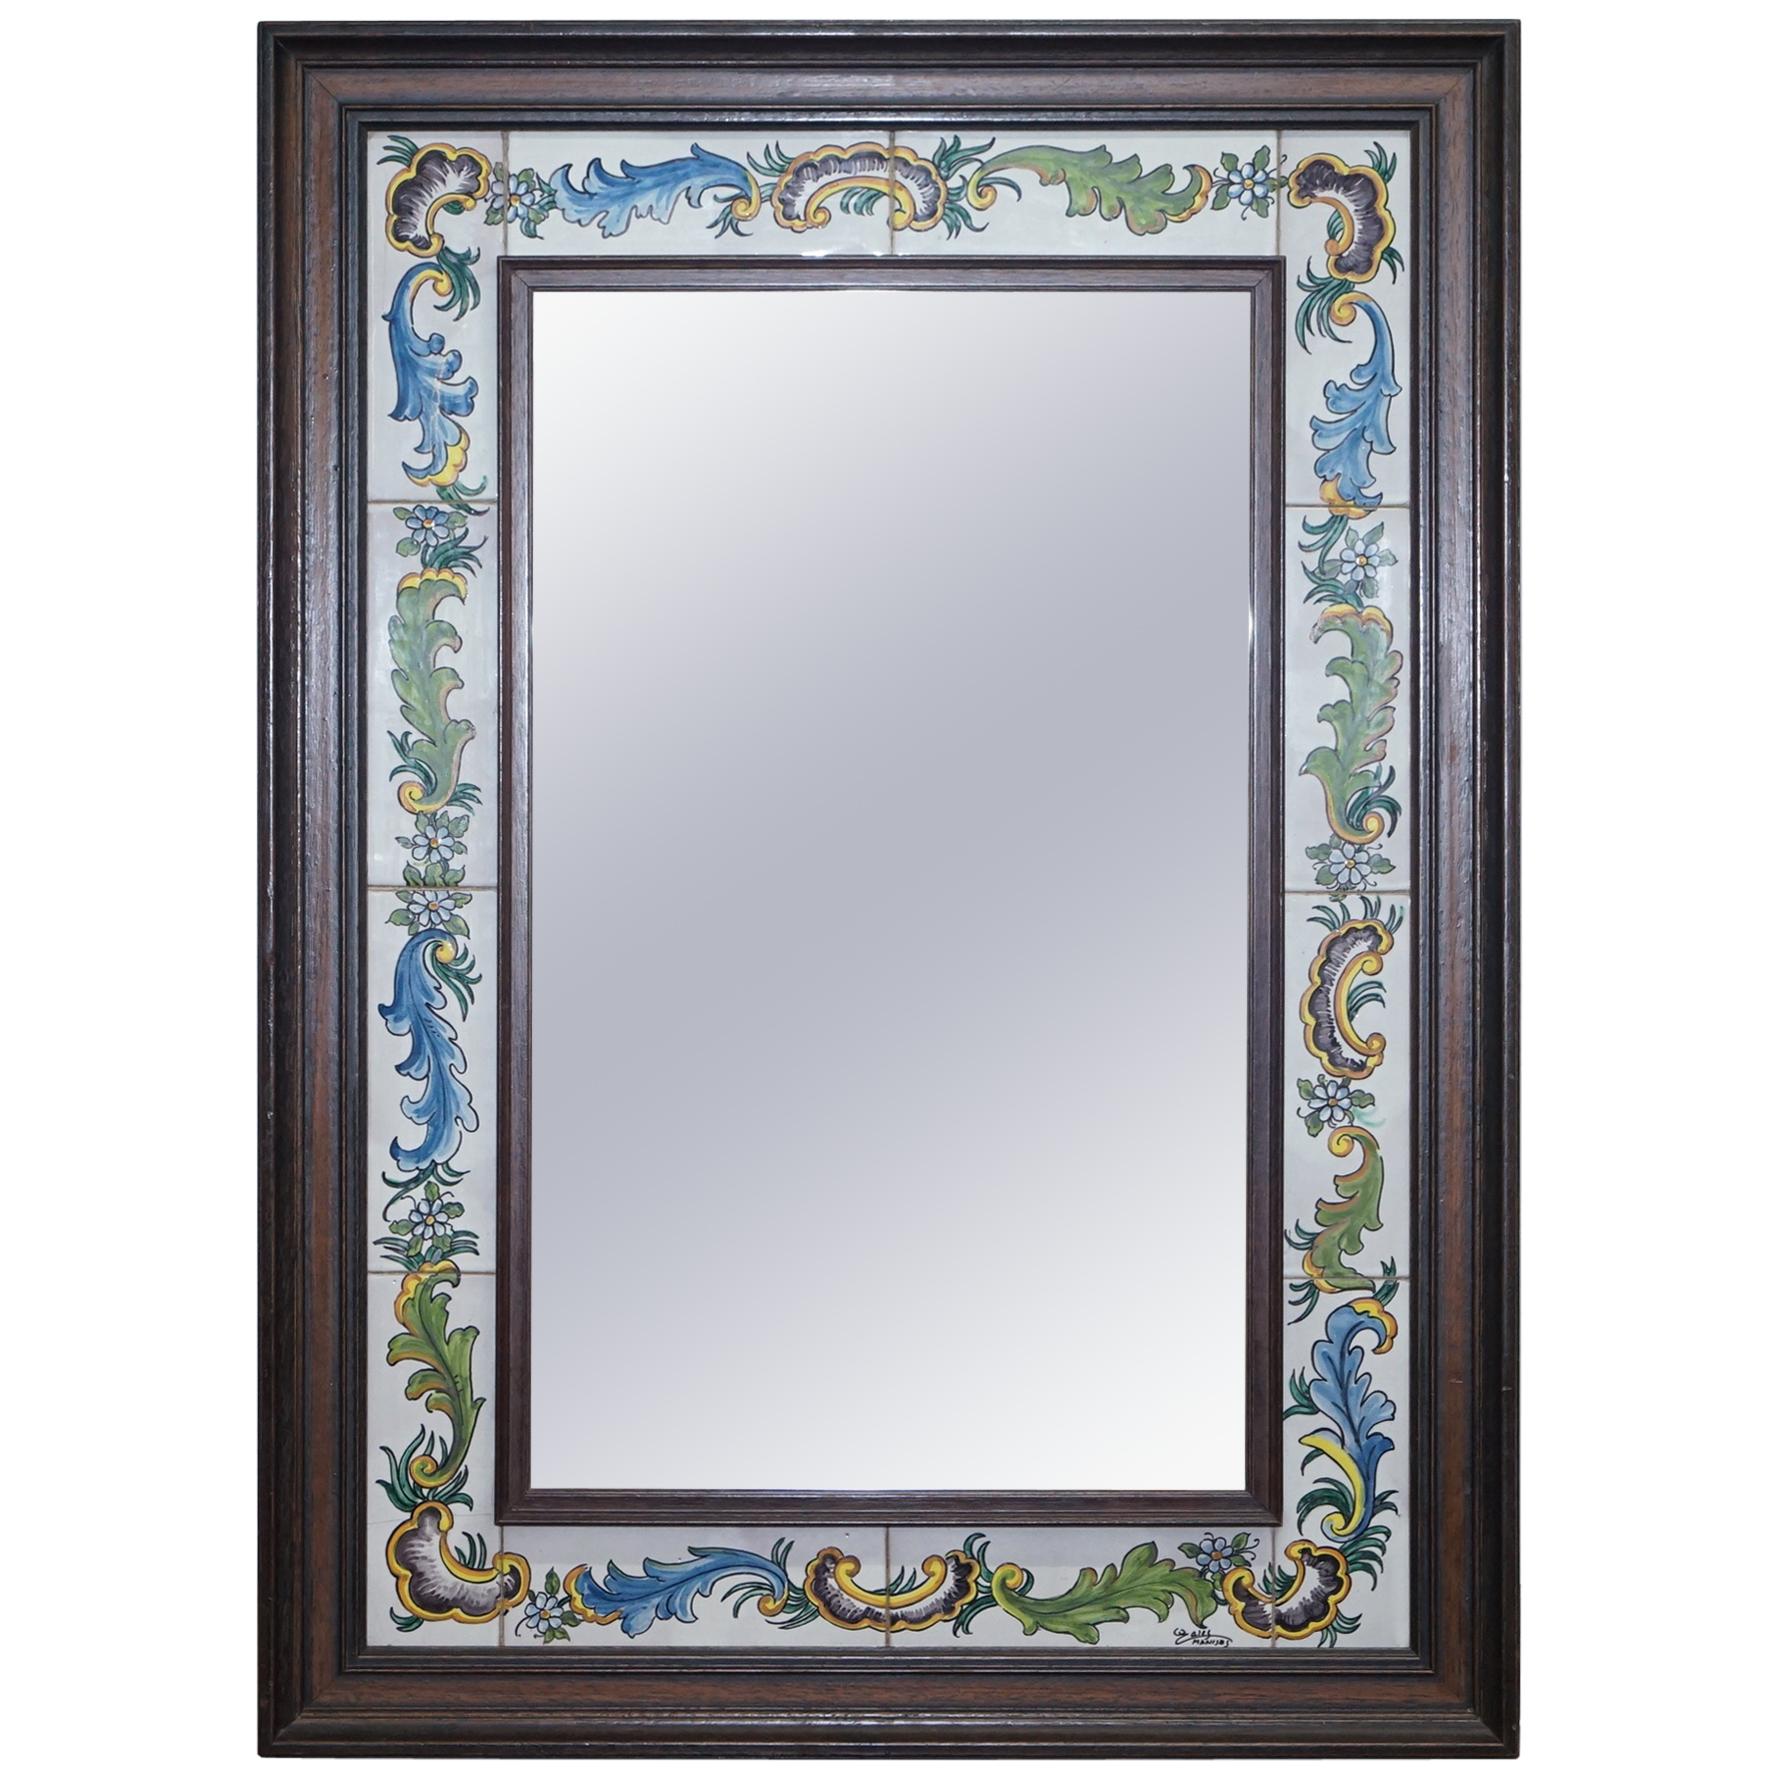 Lovely Vintage Mediterranean Tile Mirror Signed to the Bottom Lovely Look & Feel